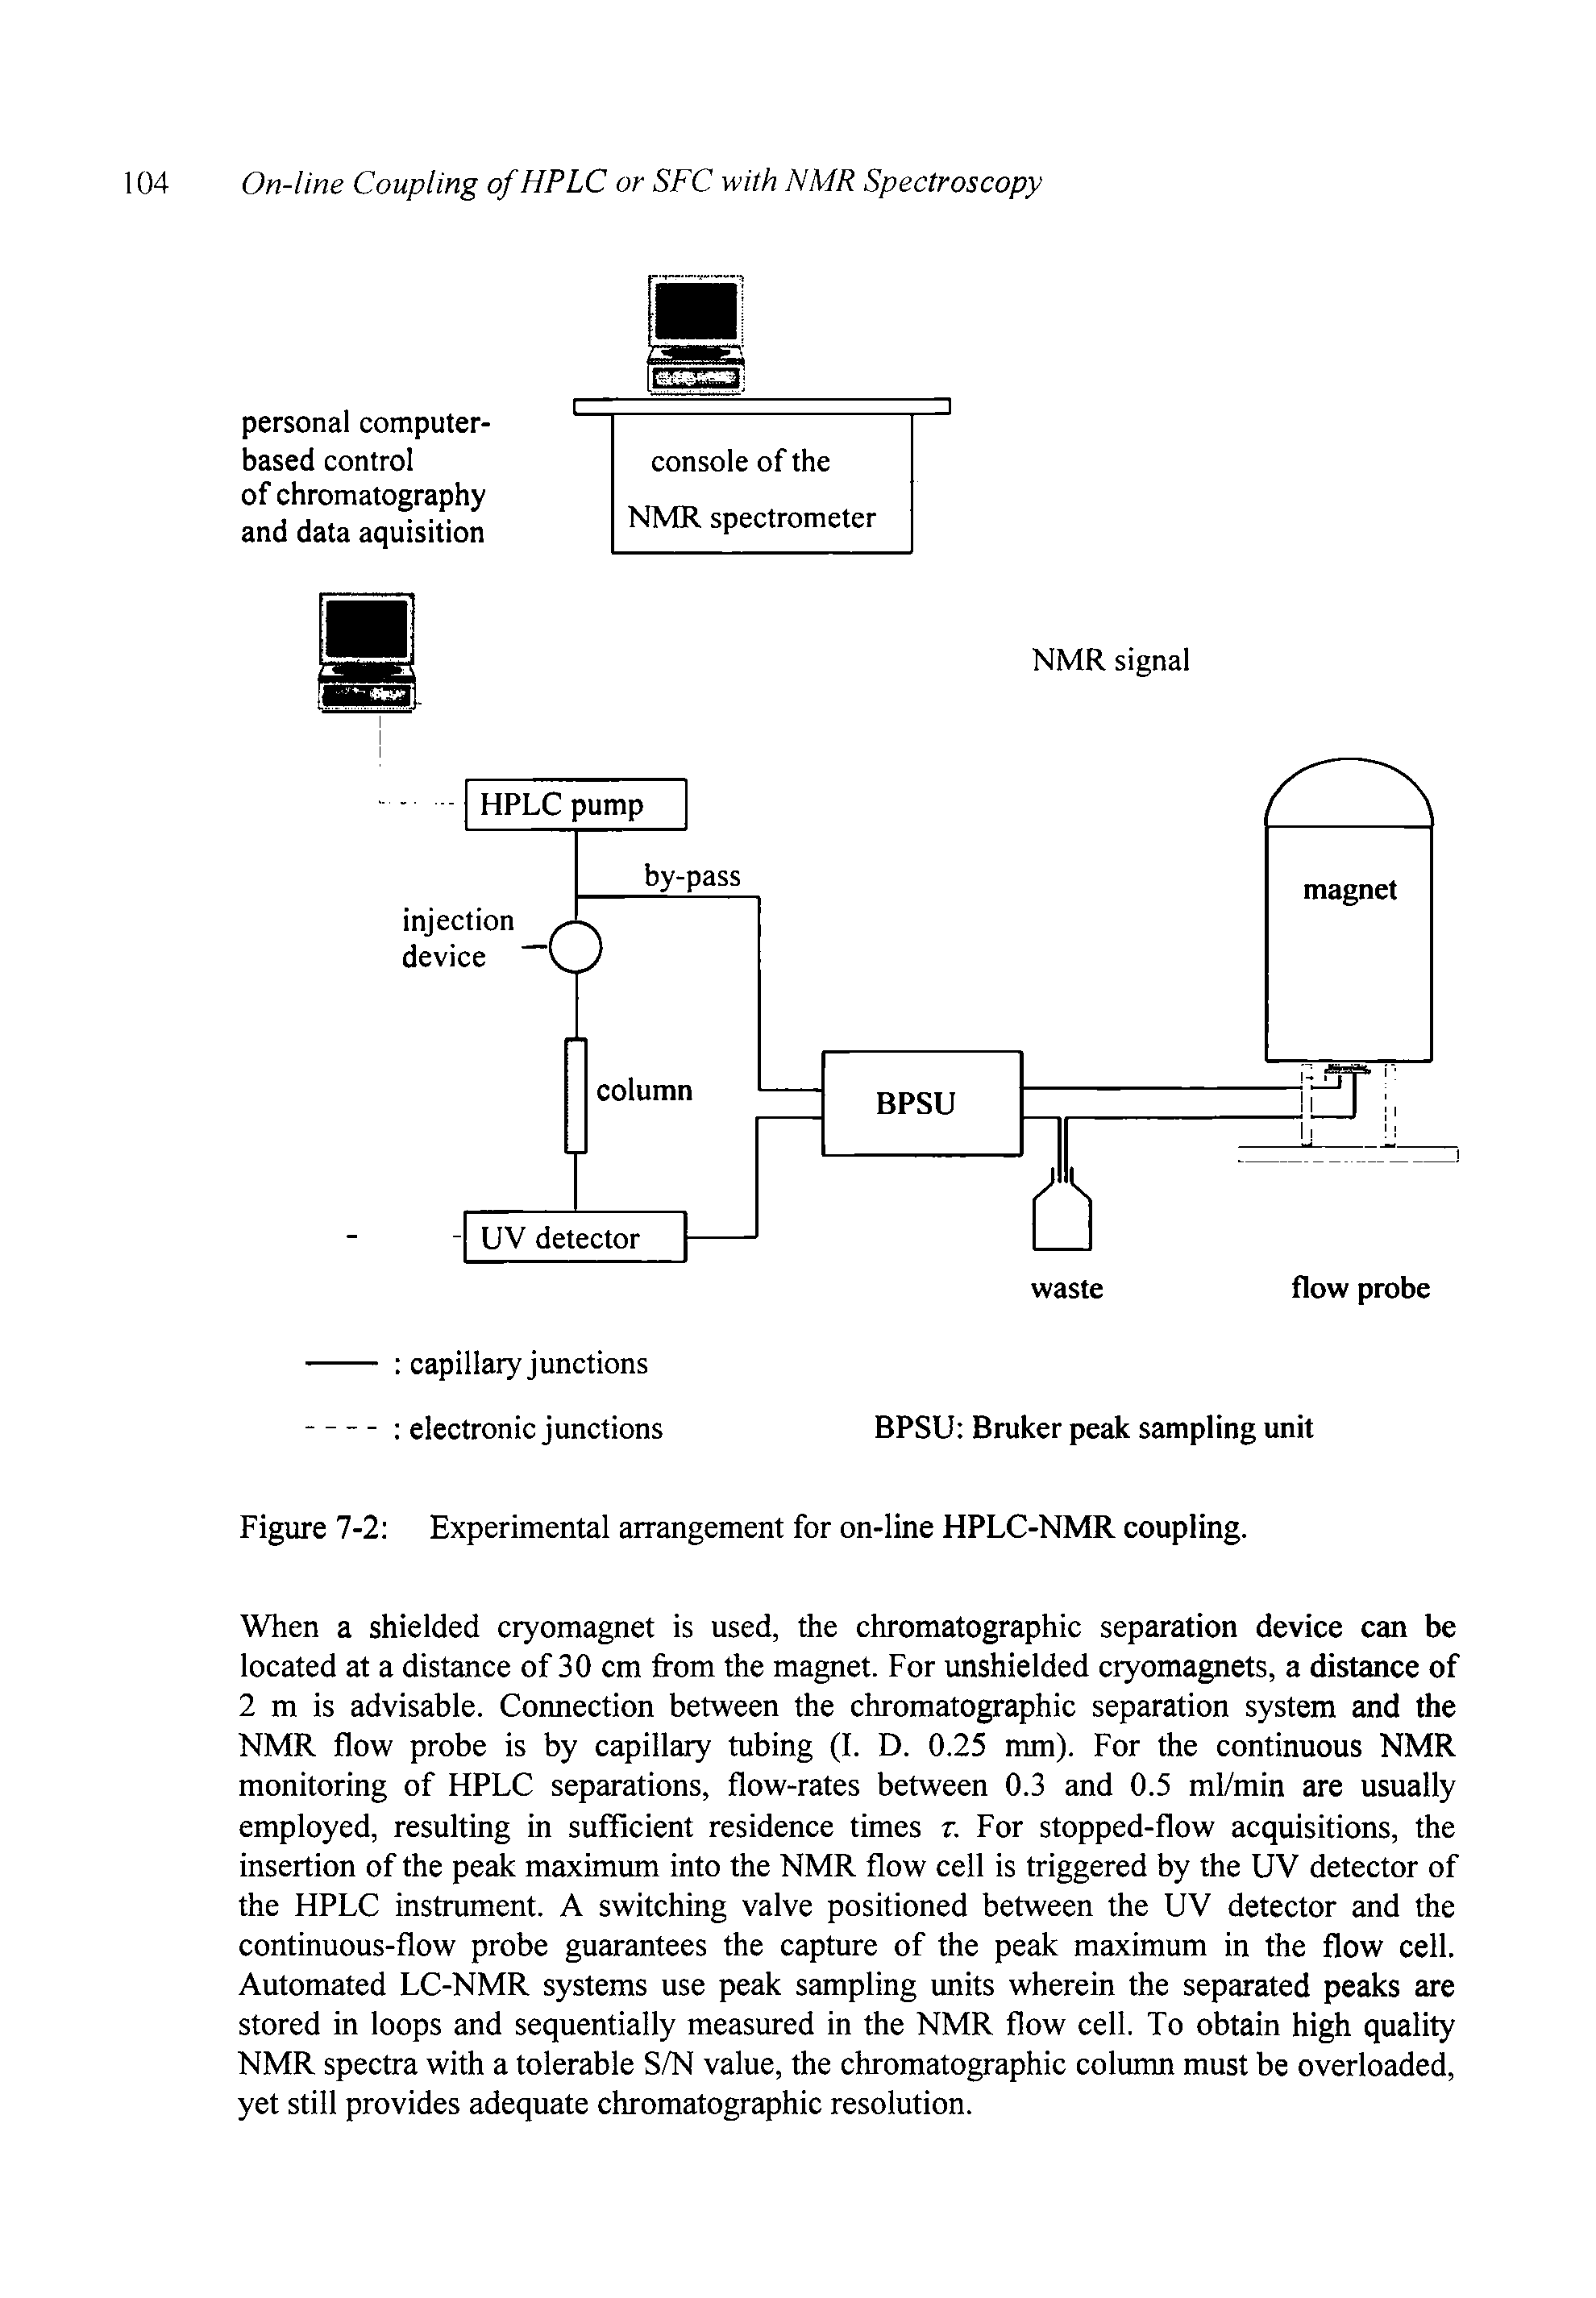 Figure 7-2 Experimental arrangement for on-line HPLC-NMR coupling.